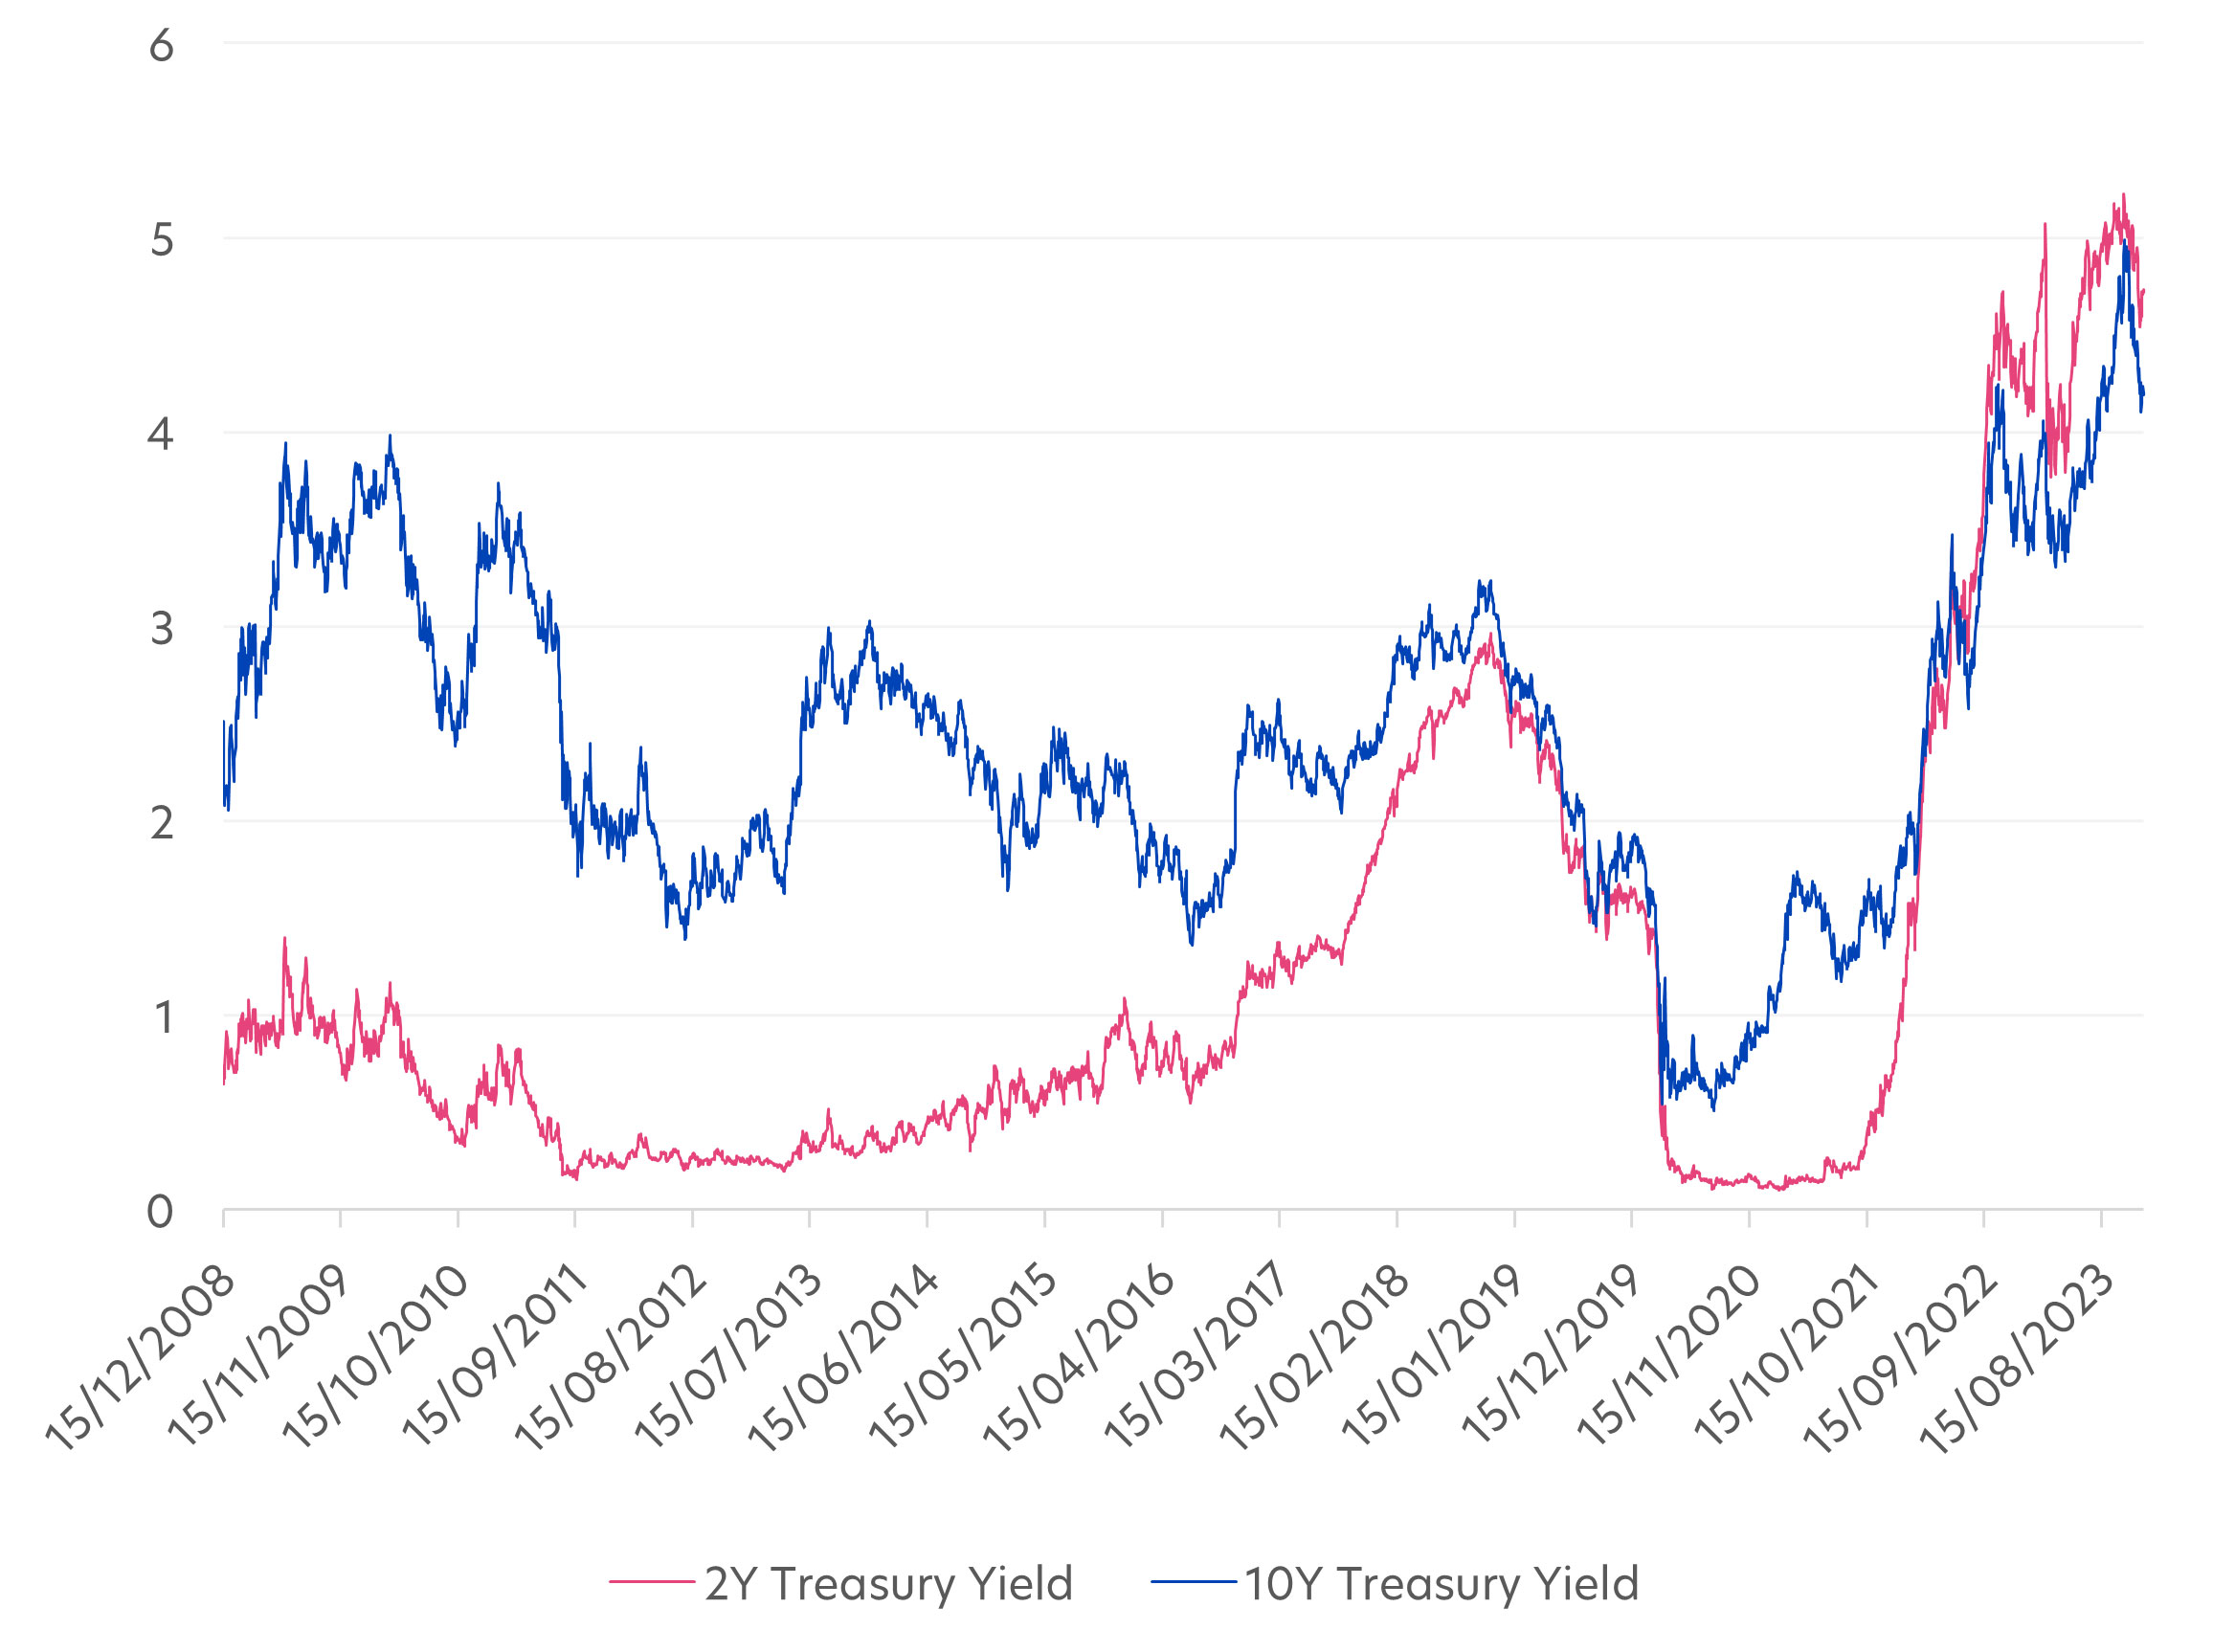 Figure 1: US 2Y and 10Y Treasury yields (%), 2008 - 2023